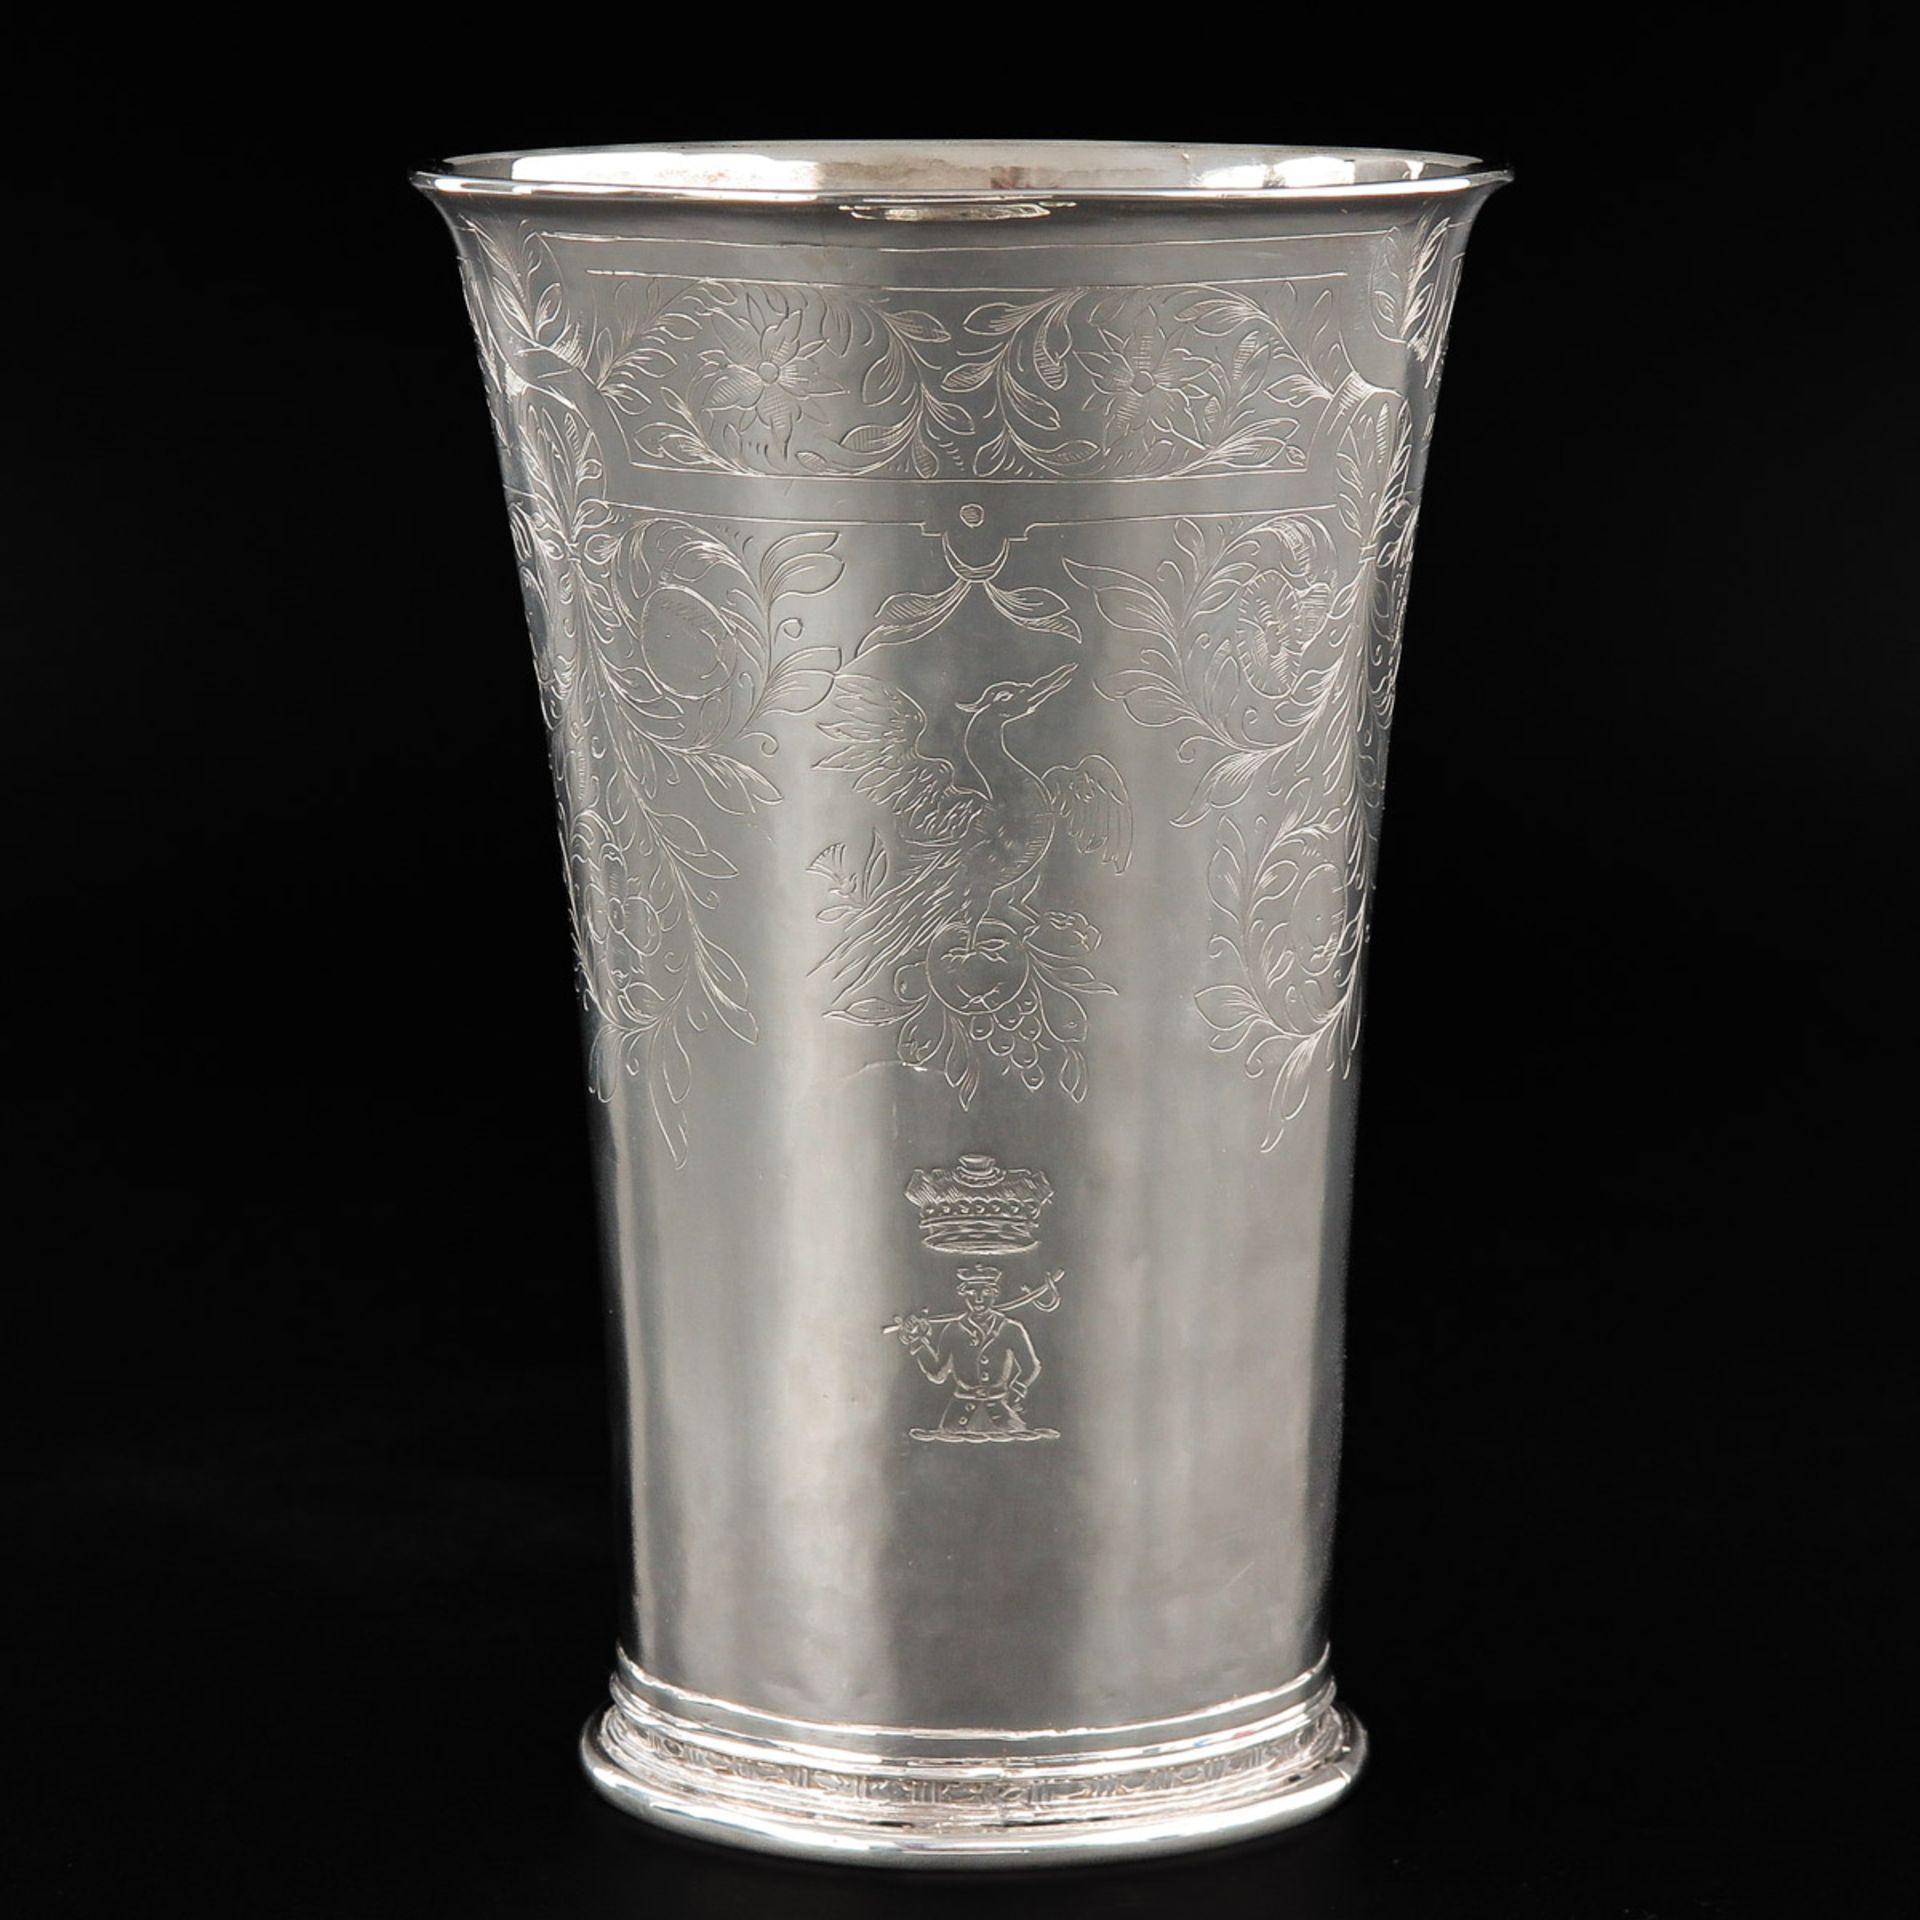 A 17th Century Dutch Silver Communion Cup